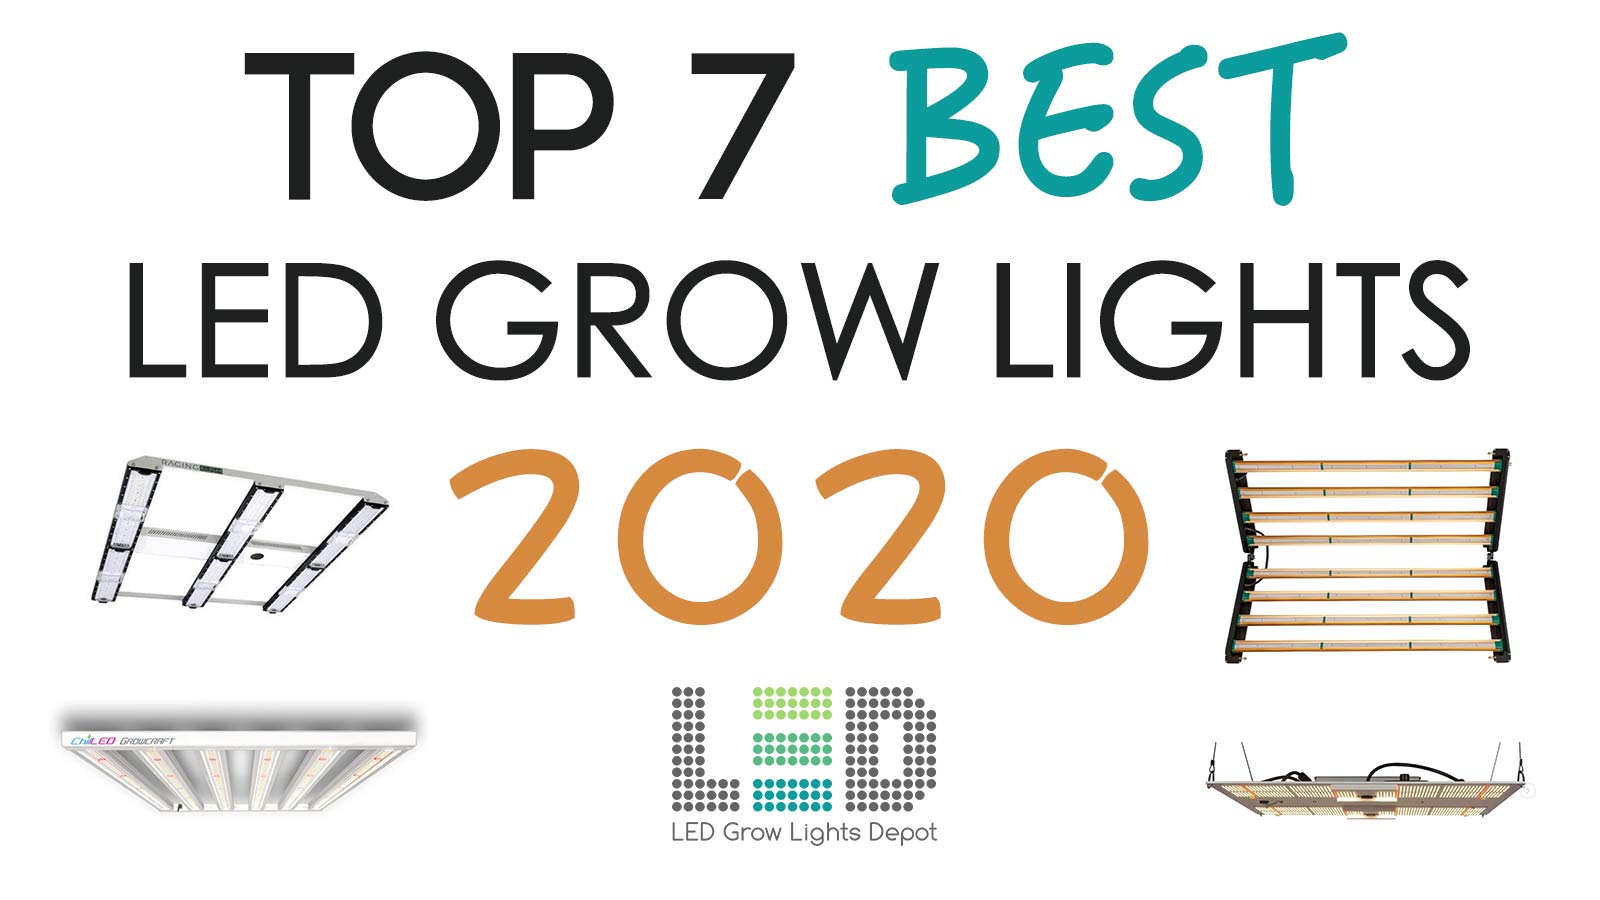 Top 7 Best LED Grow Lights 2020